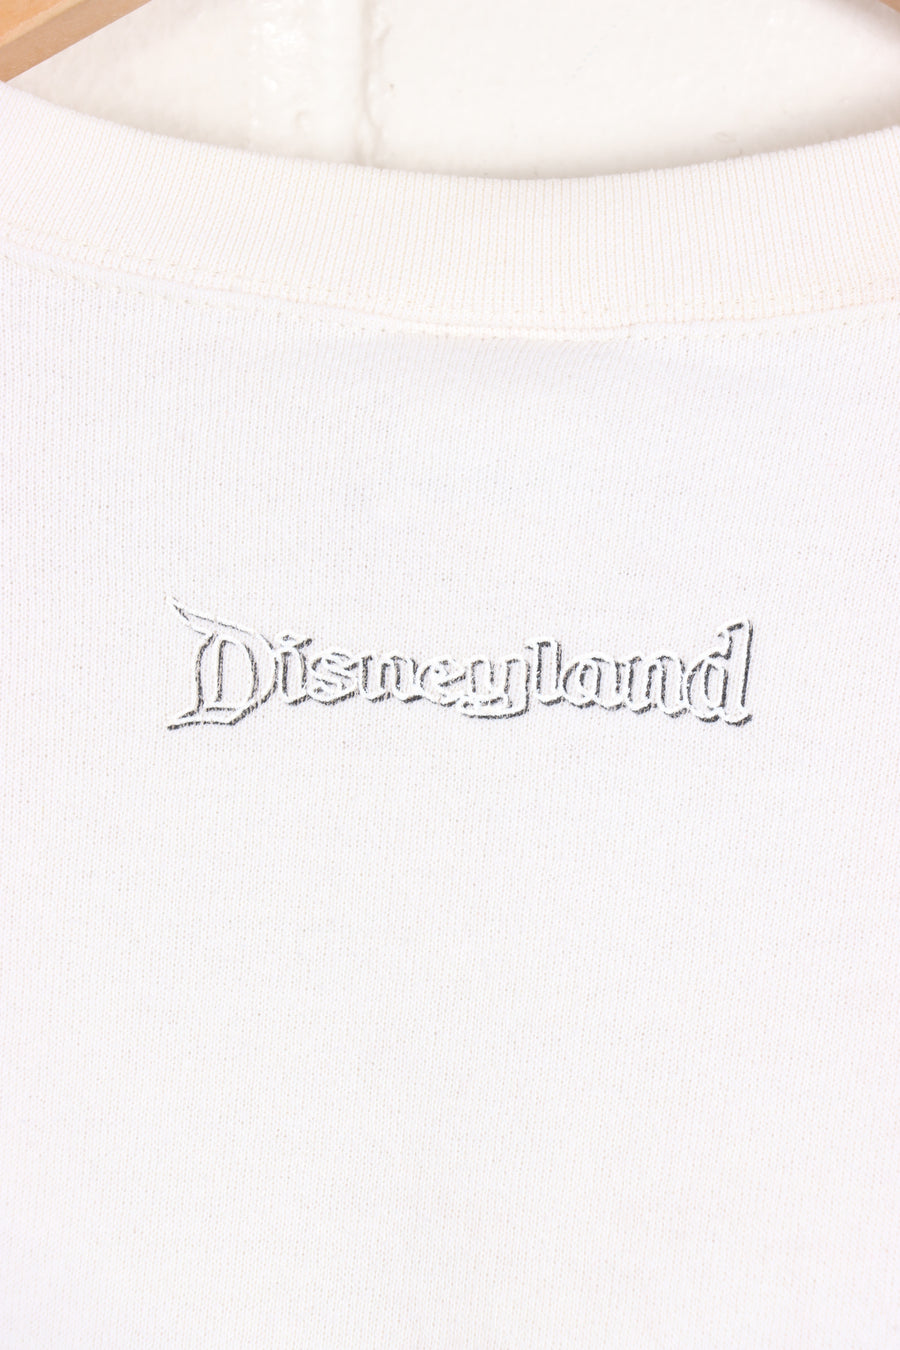 DISNEY Happy Winnie The Pooh Disneyland  Sweatshirt USA Made (XL)